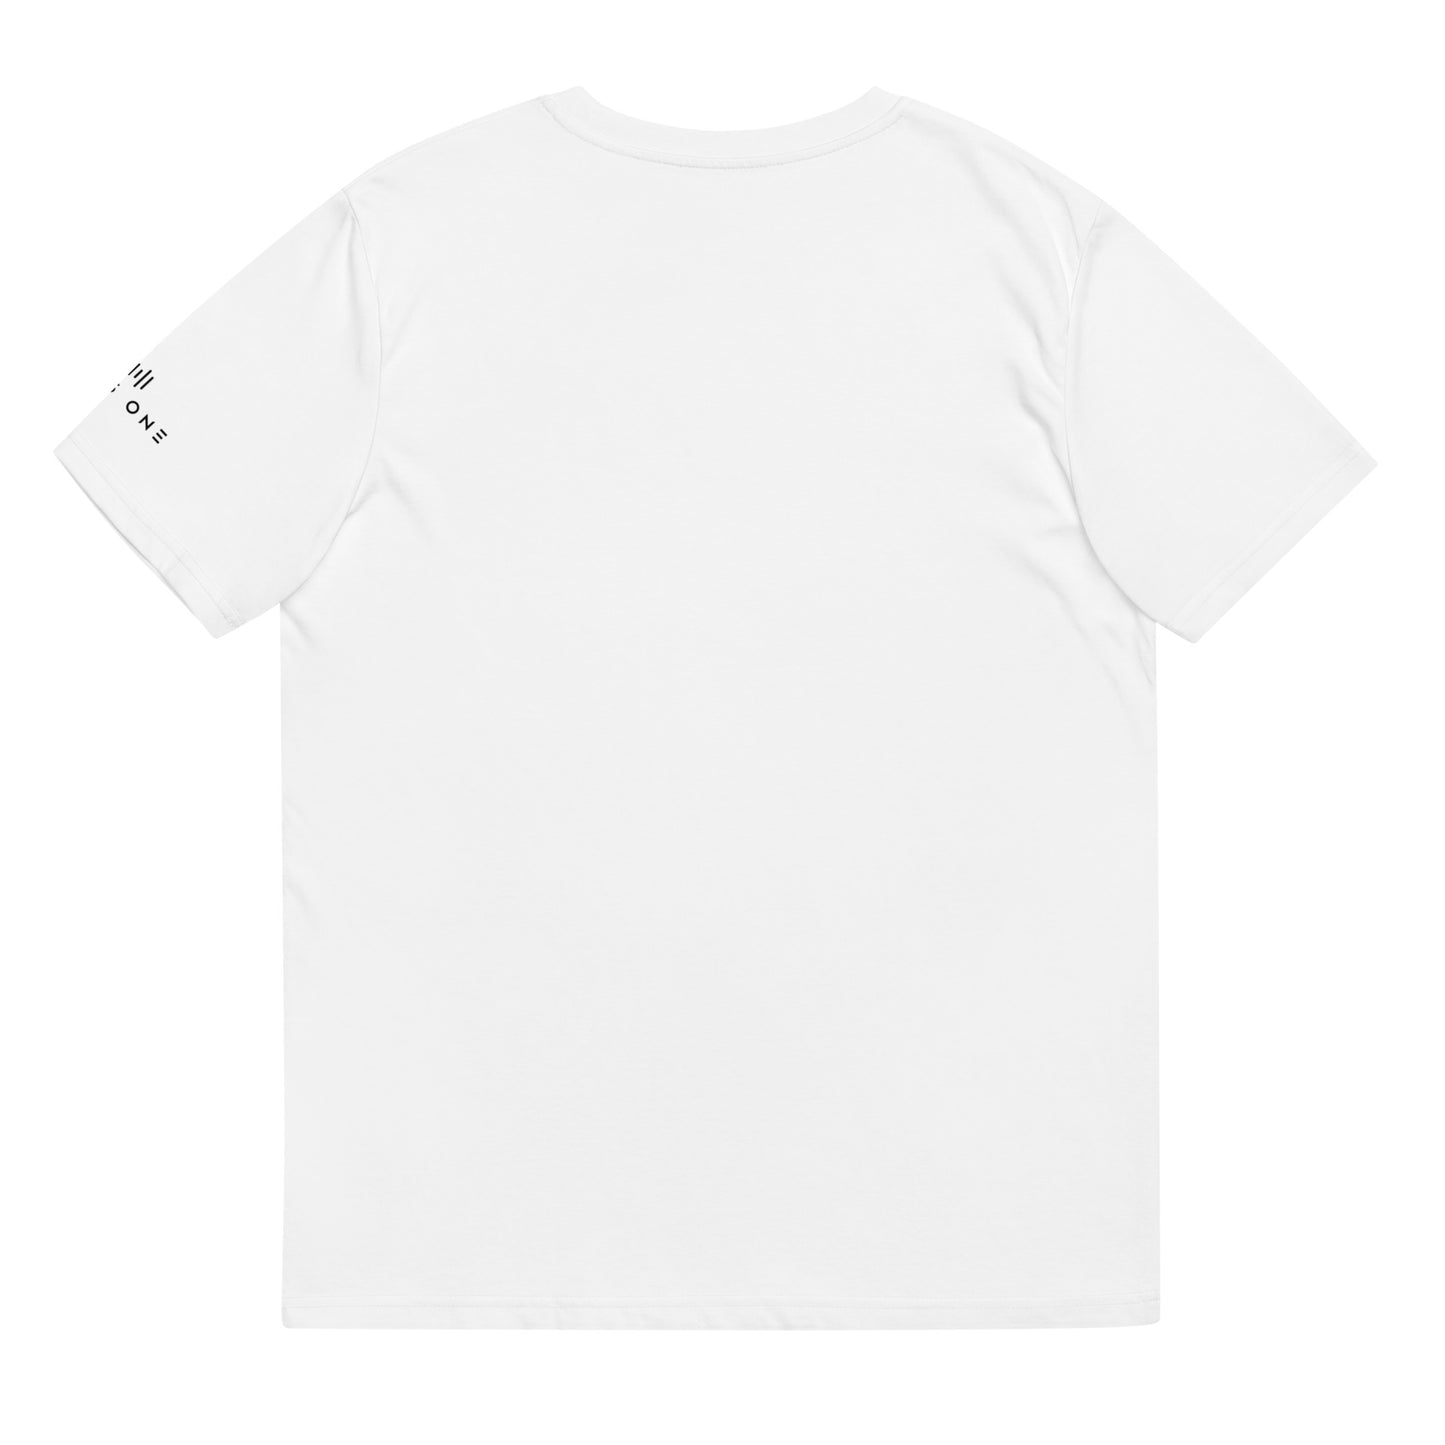 Ltd (Opus One v1) Unisex organic cotton t-shirt (Black Text)